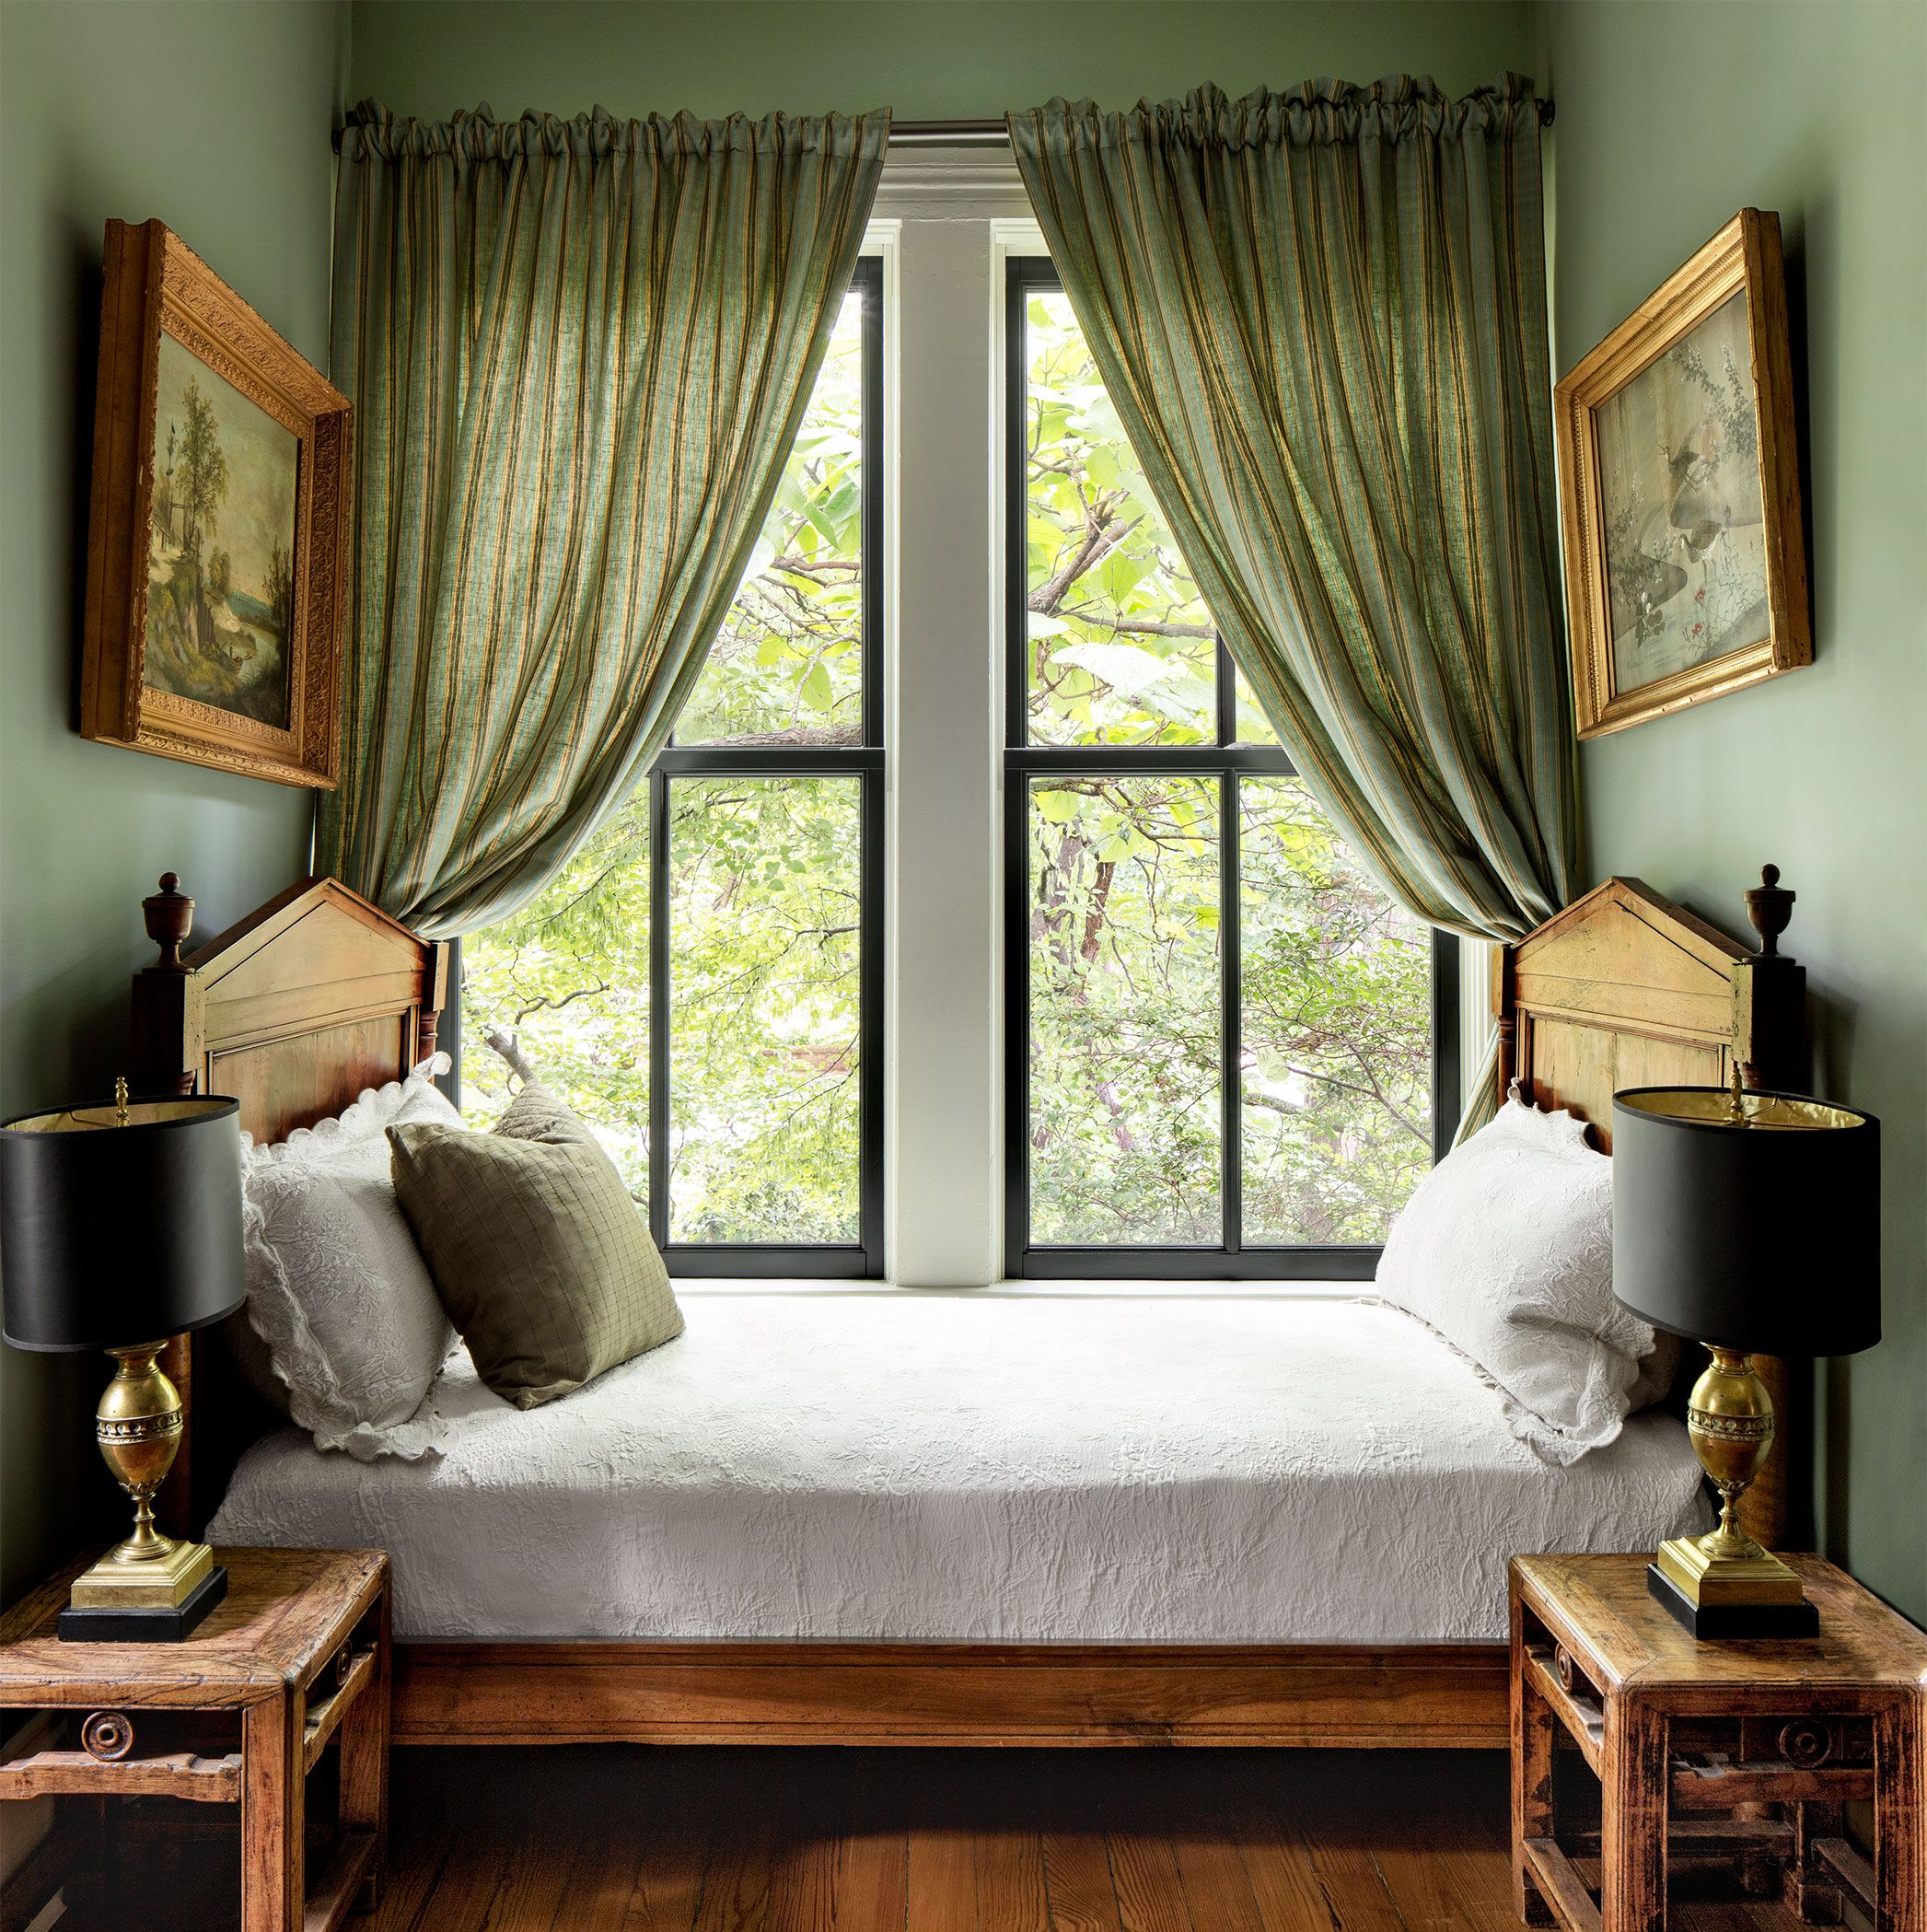 traditional bedroom ideas green